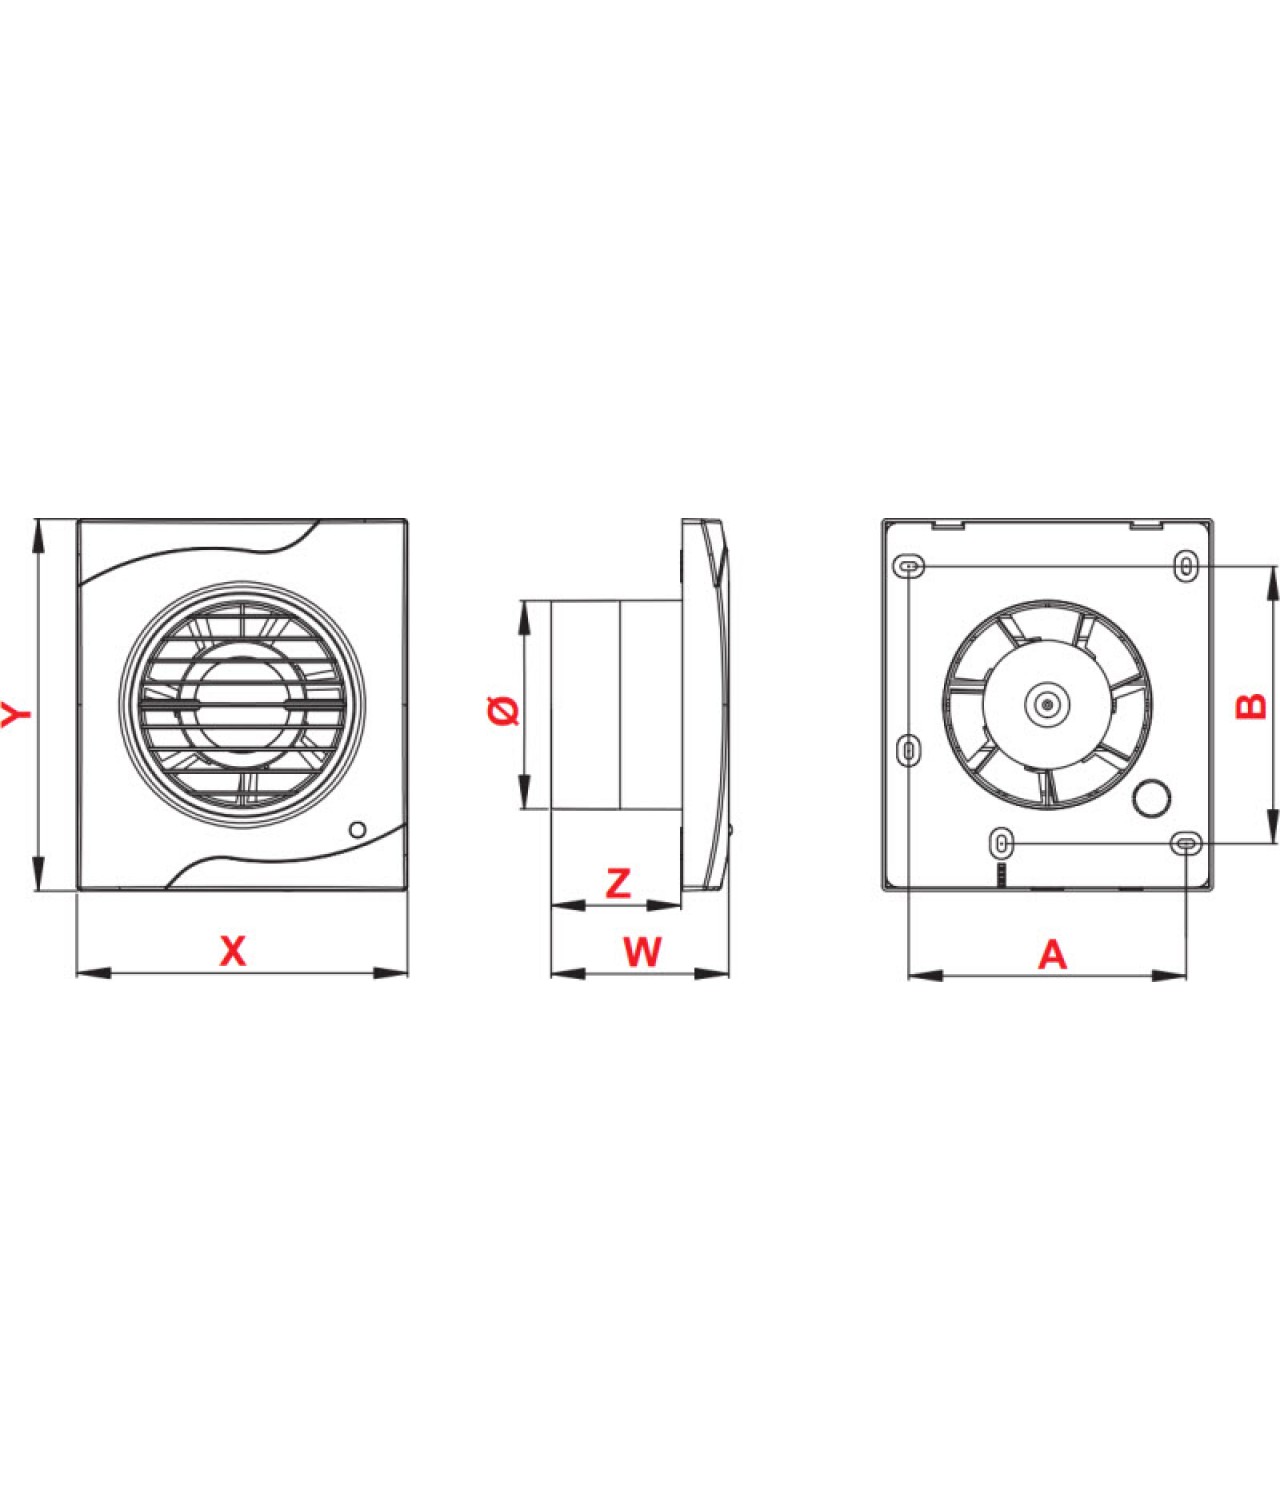 Вентилятор для ванной комнаты VECCO - чертеж